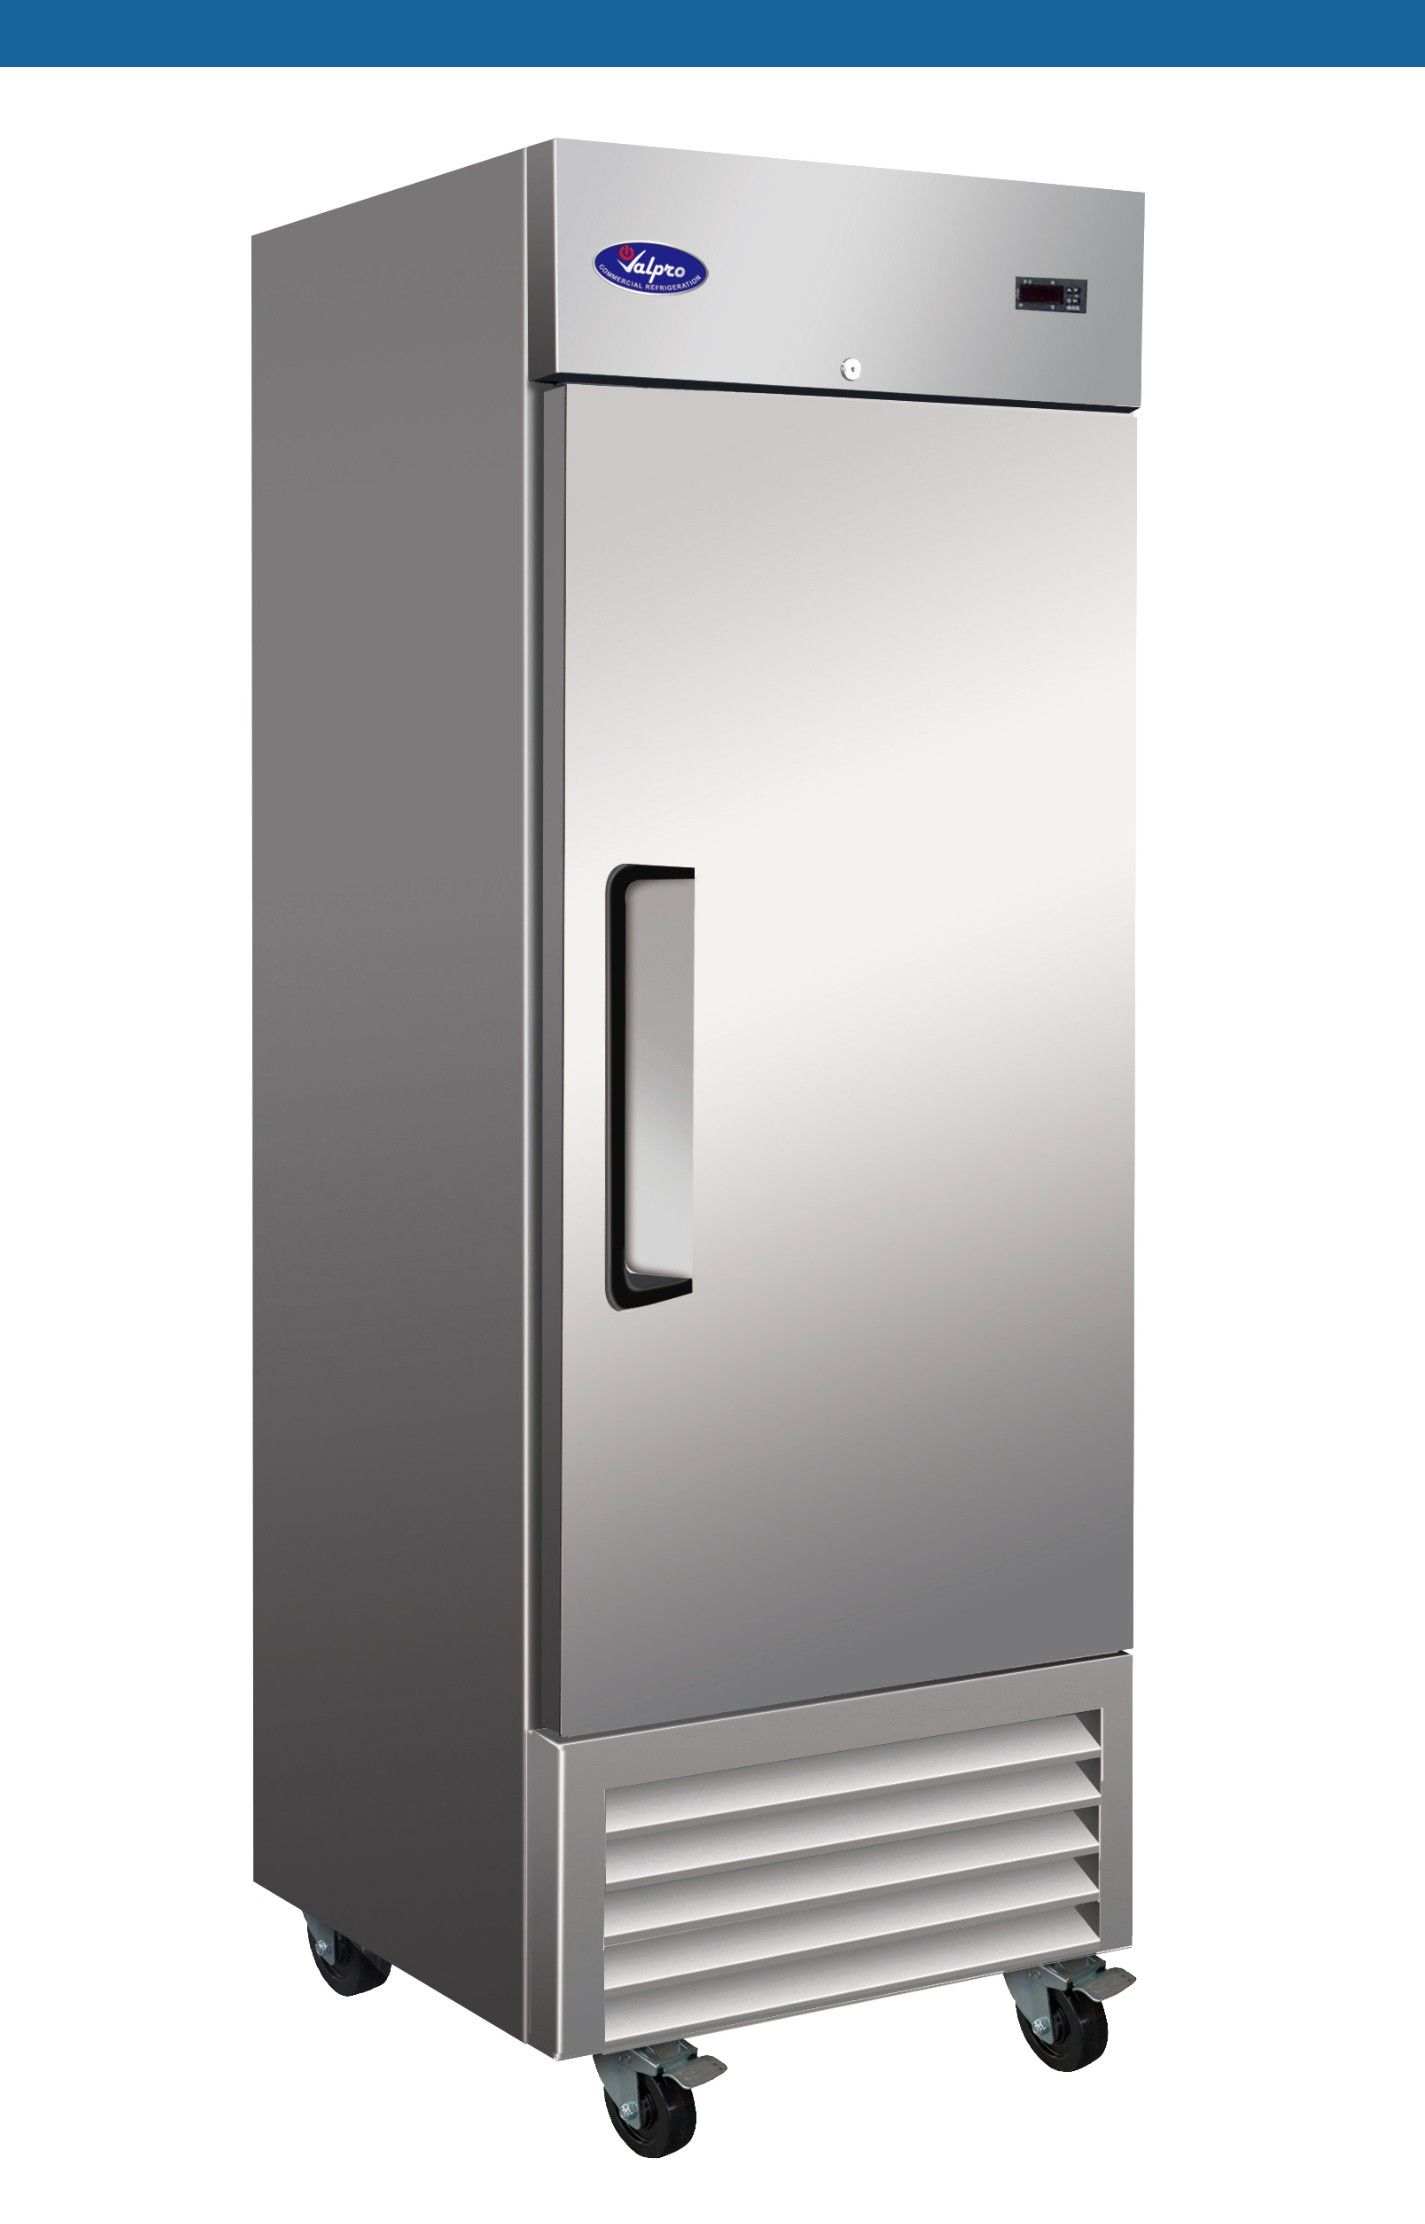 New commercial Refrigerator 23cu